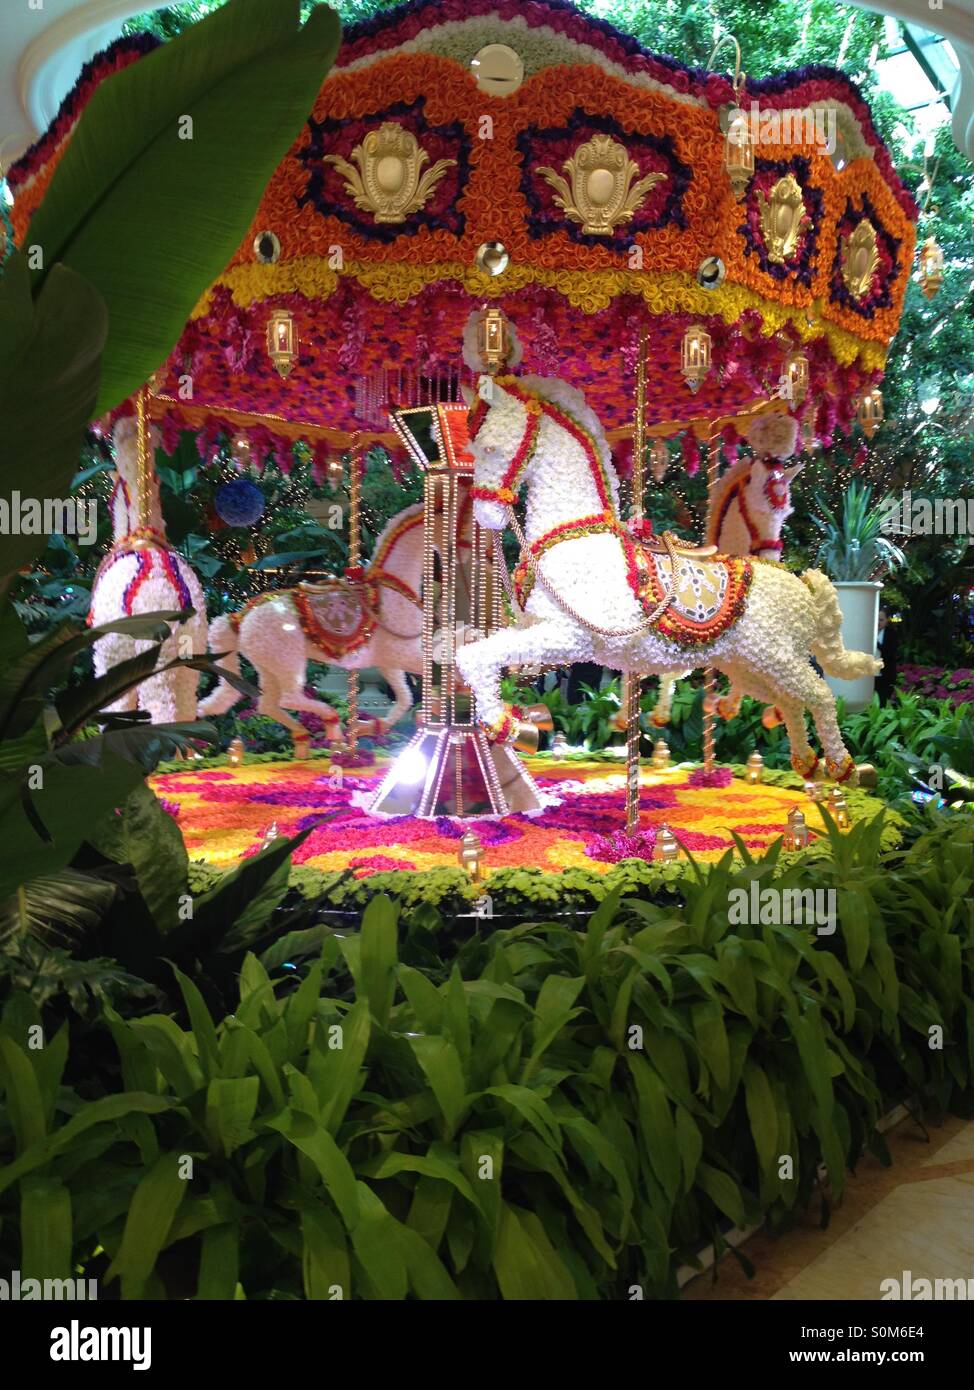 All flower merry-go-round in Vegas Stock Photo